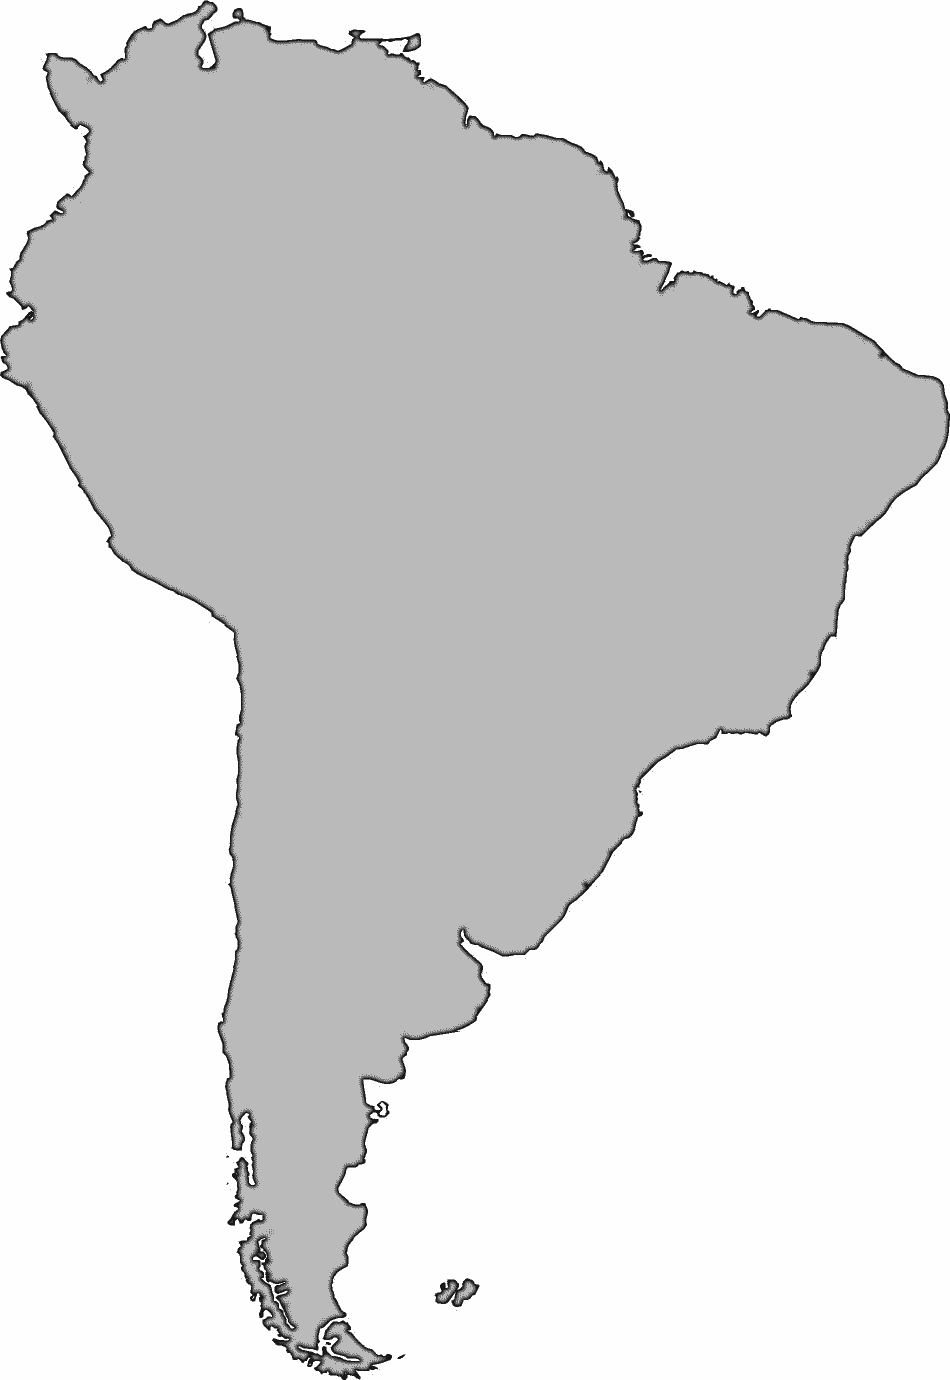 South America large BW